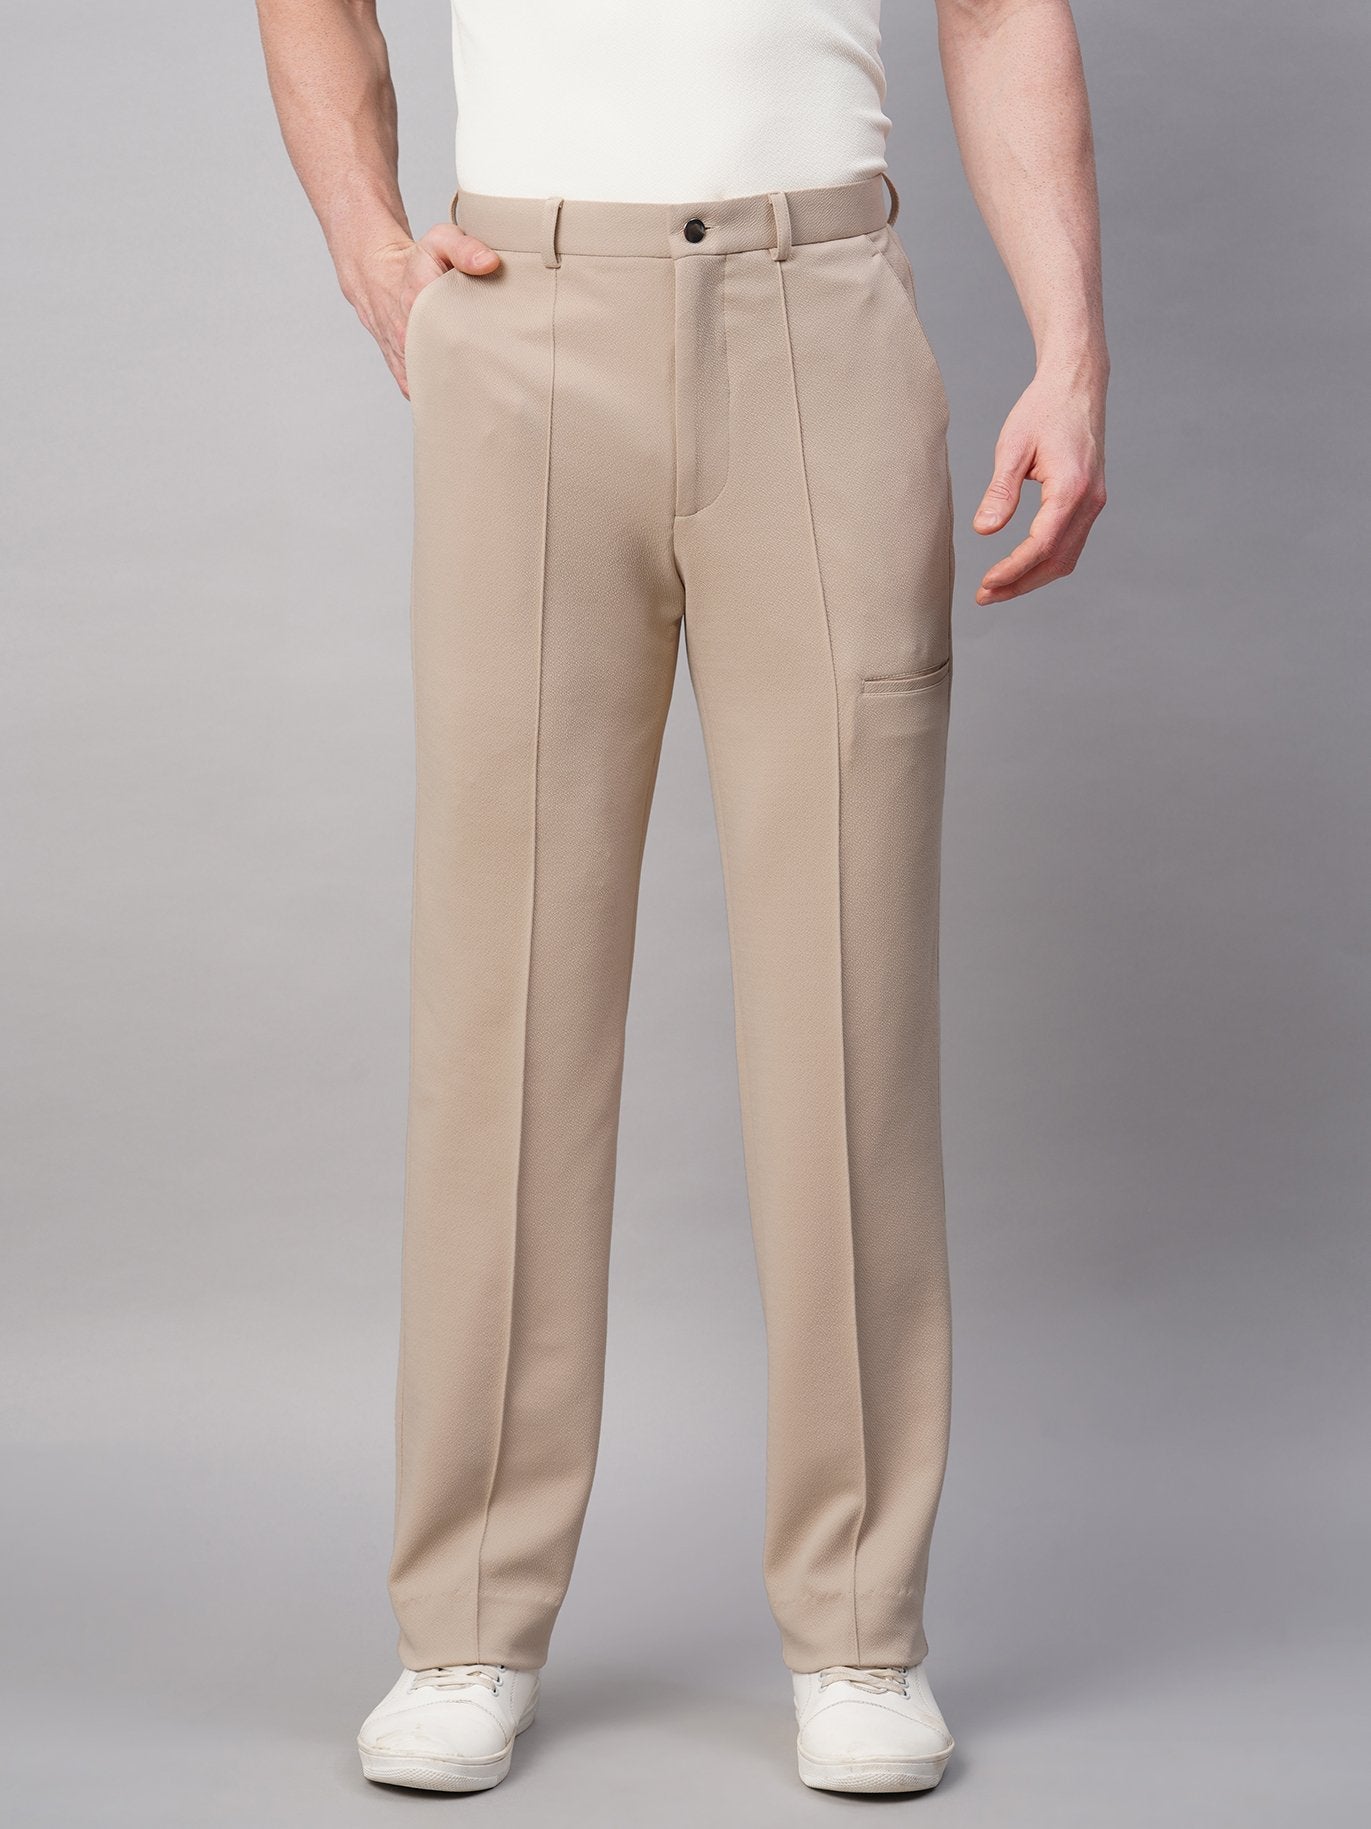 Wave Polo & Fit Block Pants Combo - Shirt & Pant